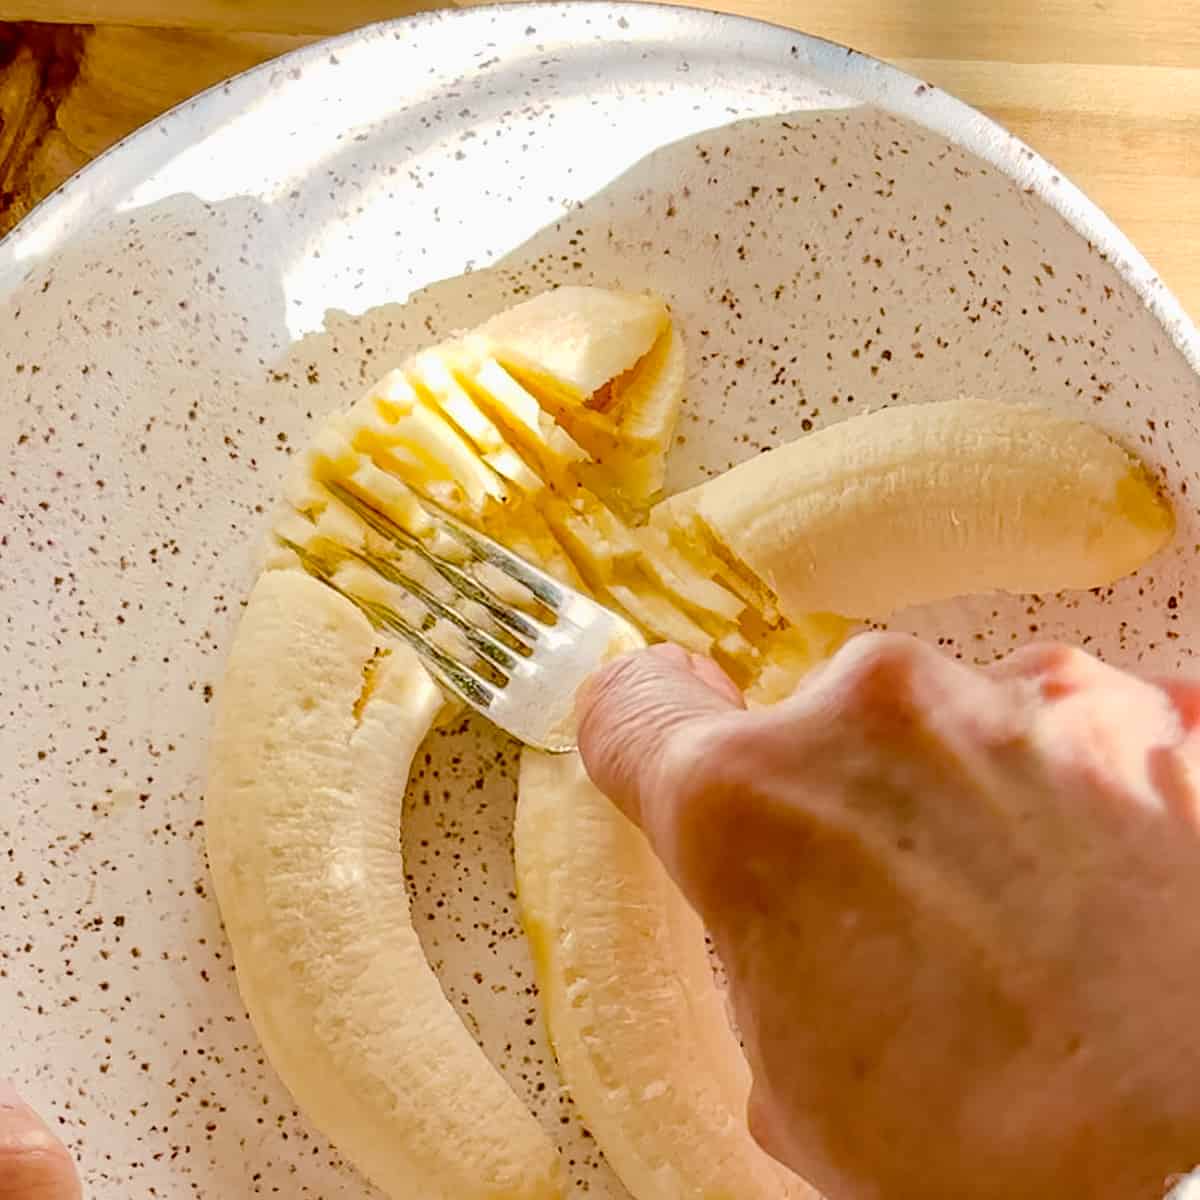 mashing bananas in a white bowl using a fork.